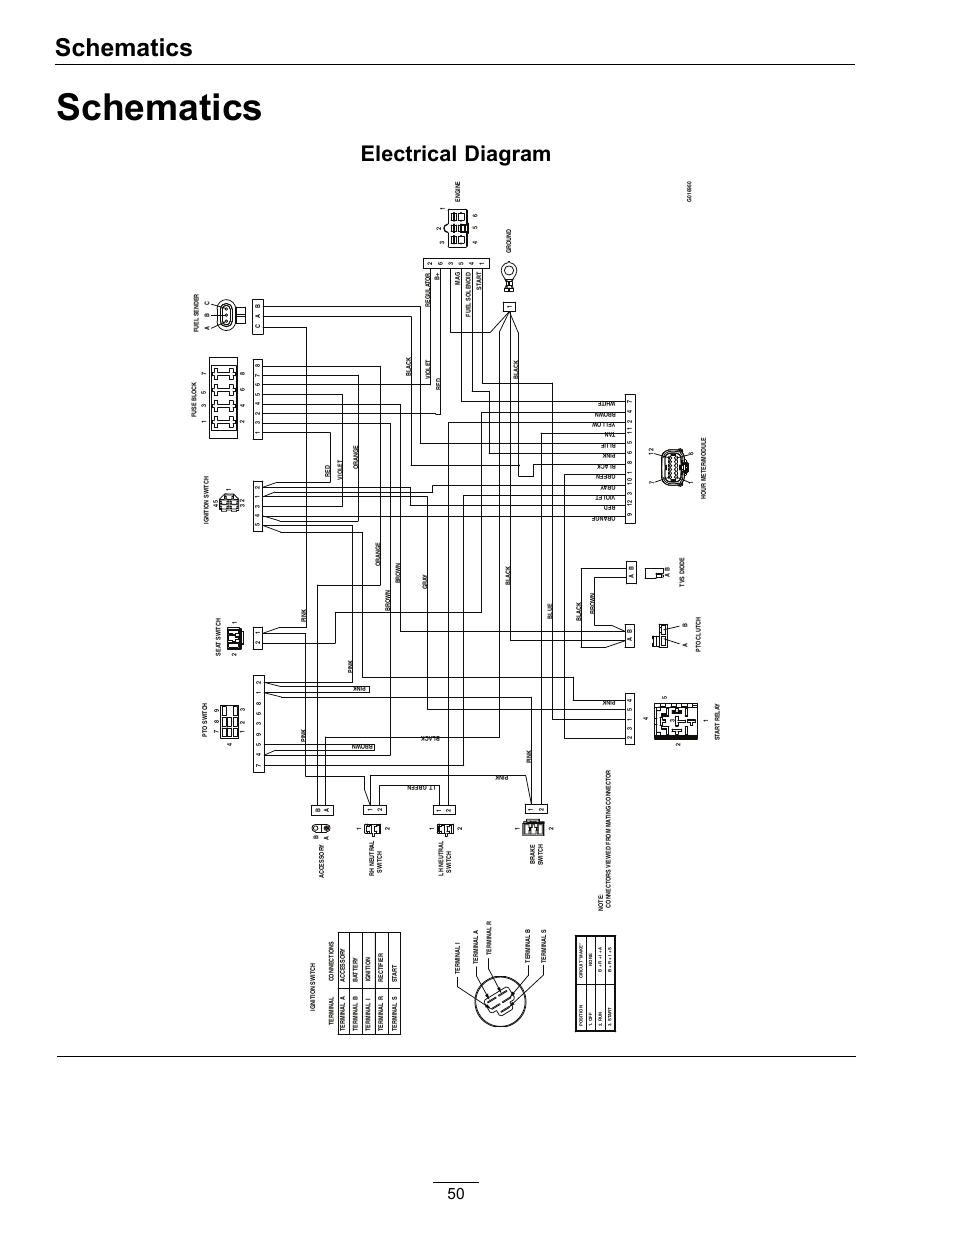 teleflex fuel gauge wiring diagram